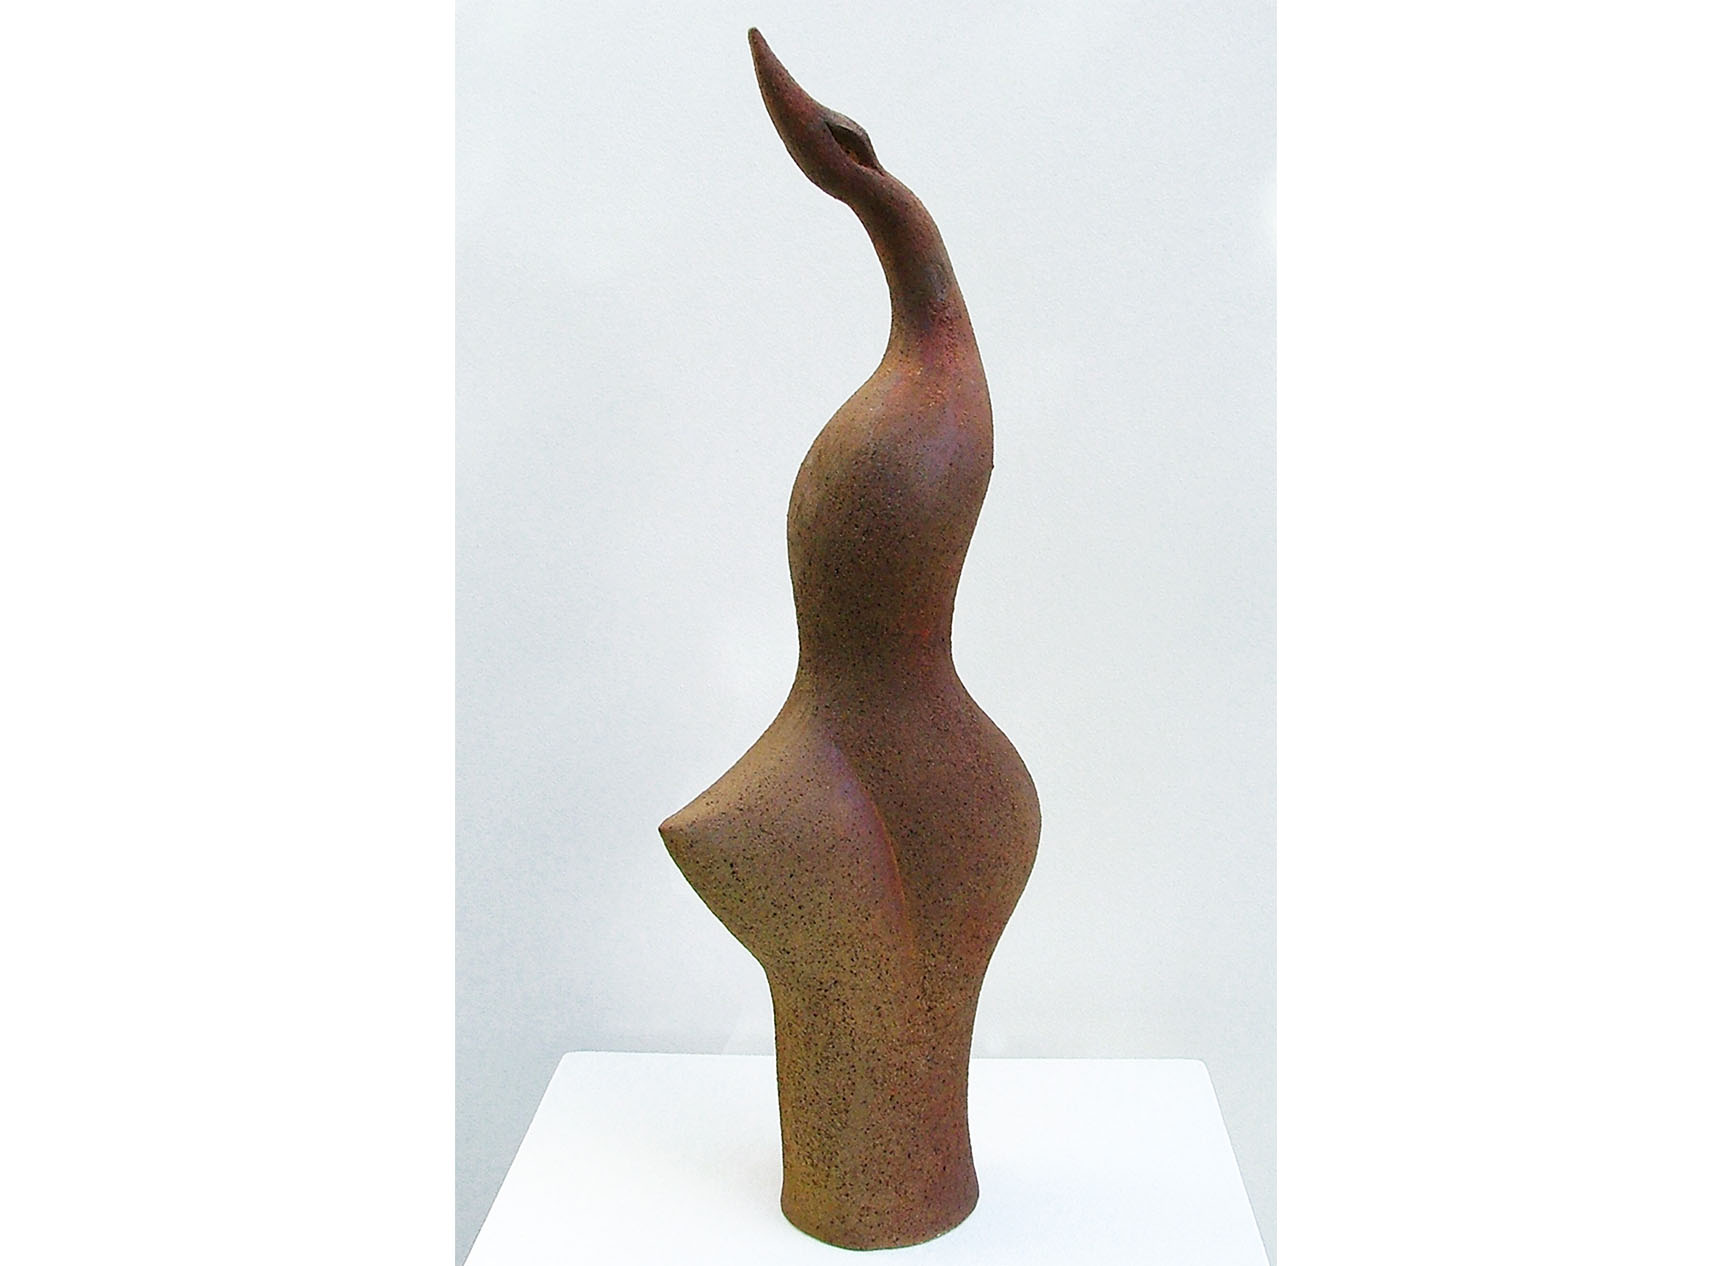 Curvacious clay sculpture with bird head called Tehuti Gender Bender